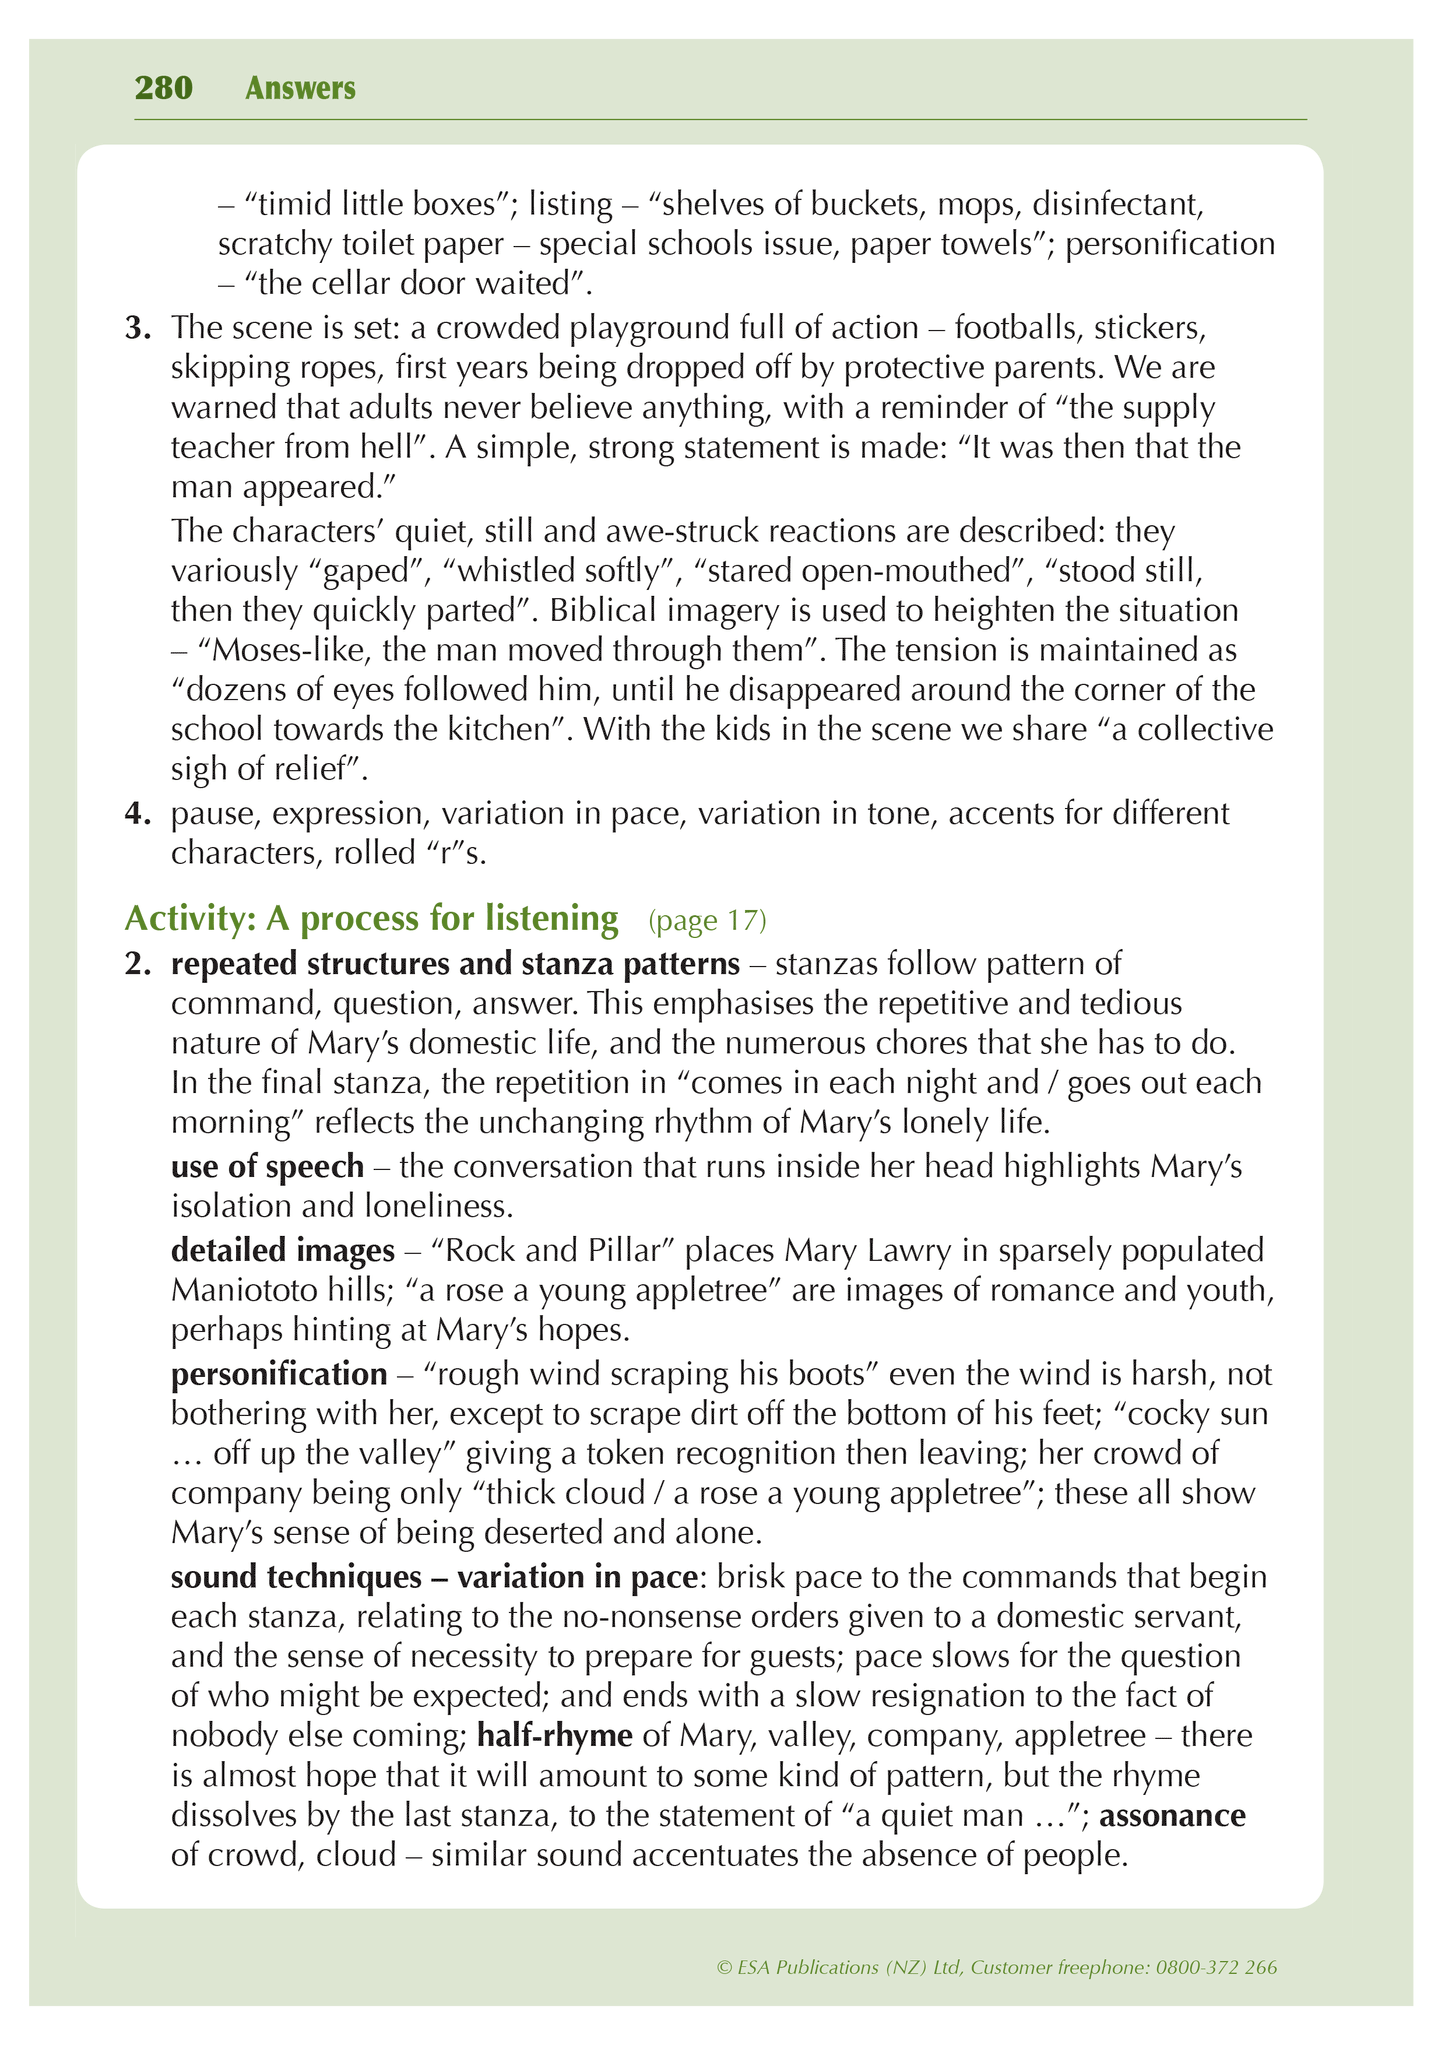 Year 10 English ESA Study Guide